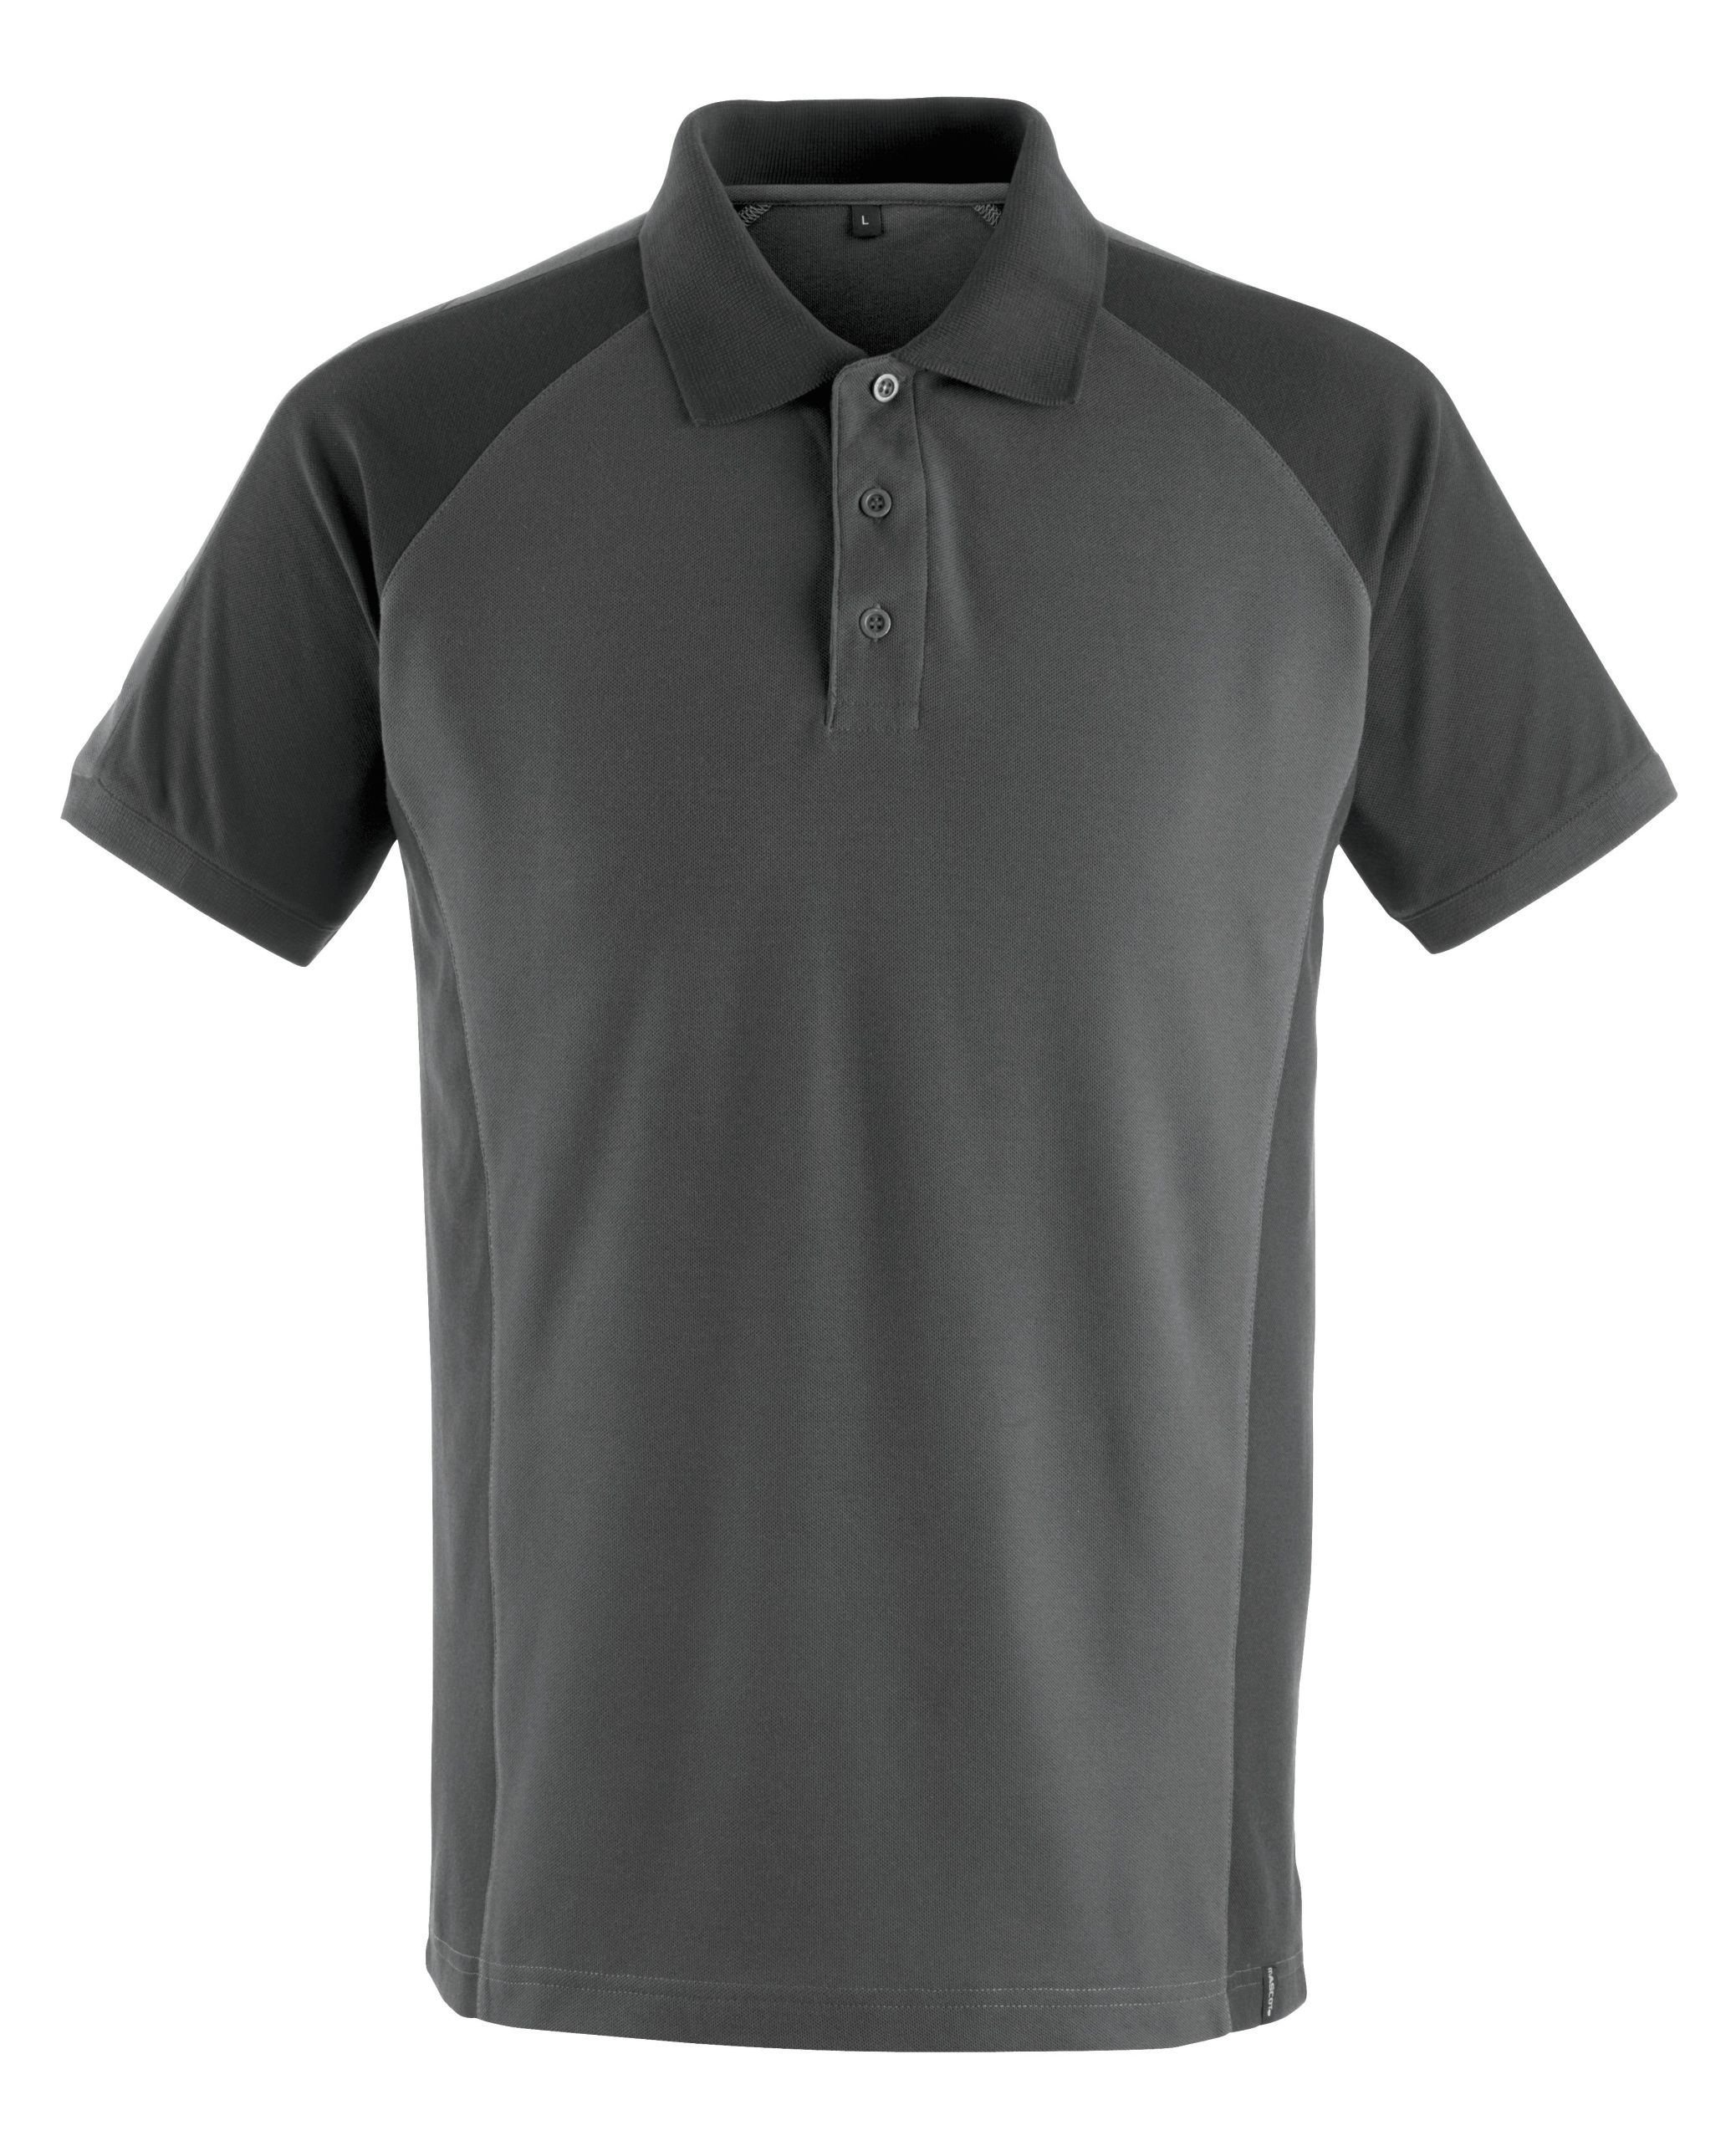 Mascot Workwear BOTTROP Black/Grey Cotton, Polyester Polo Shirt, UK- XL, EUR- XL